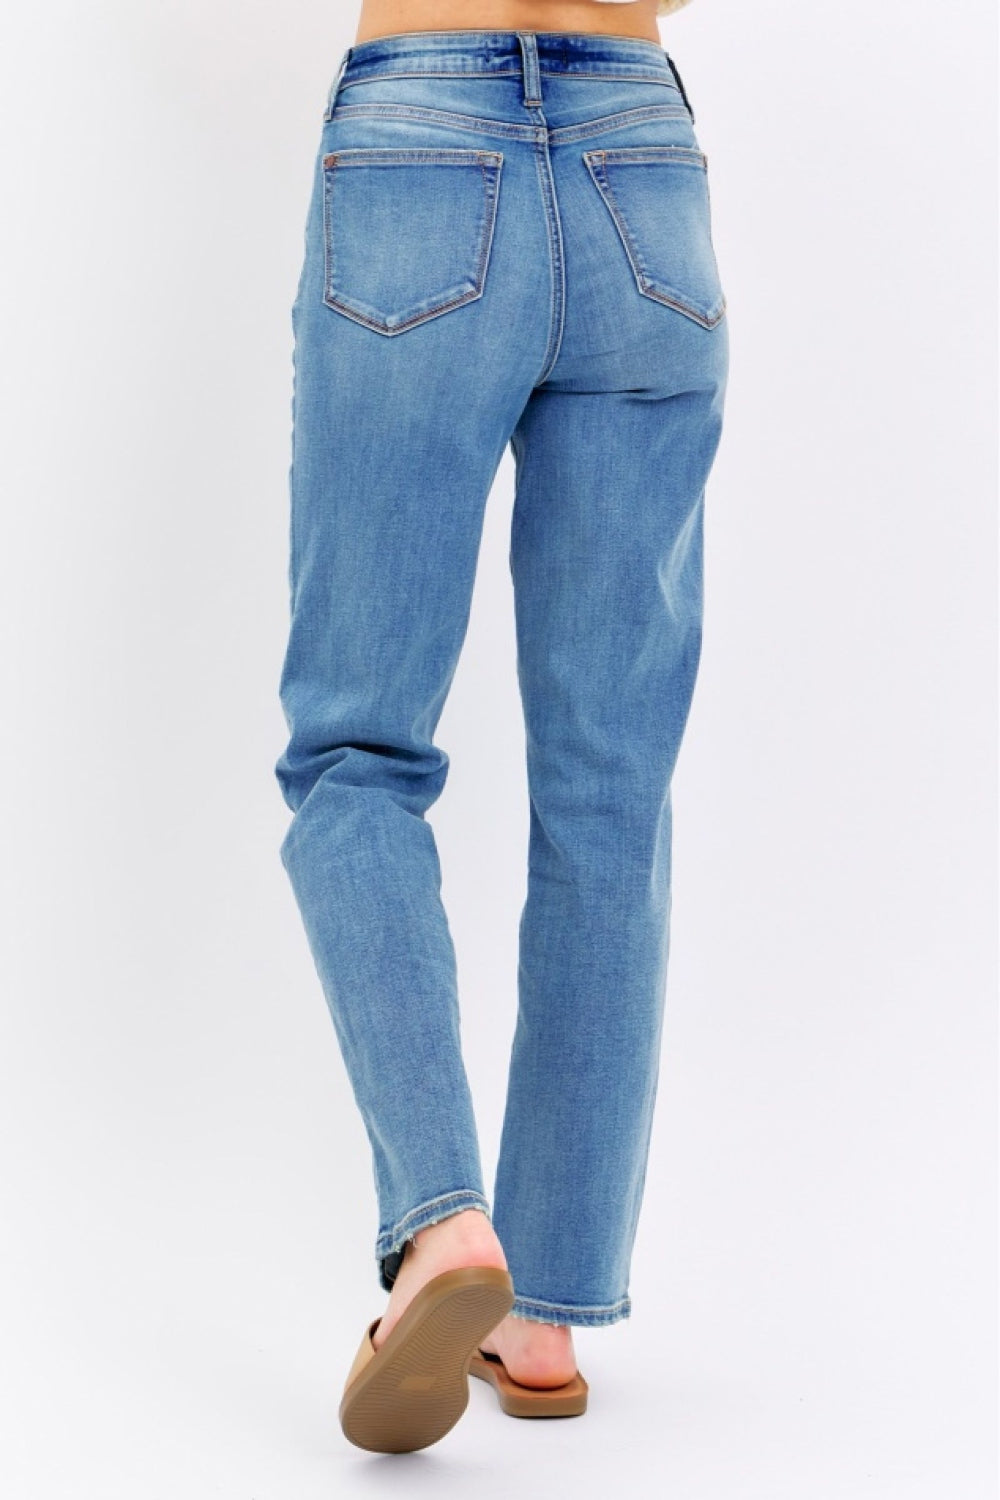 Judy Blue - High Waist Straight Leg Jeans - Inspired Eye Boutique